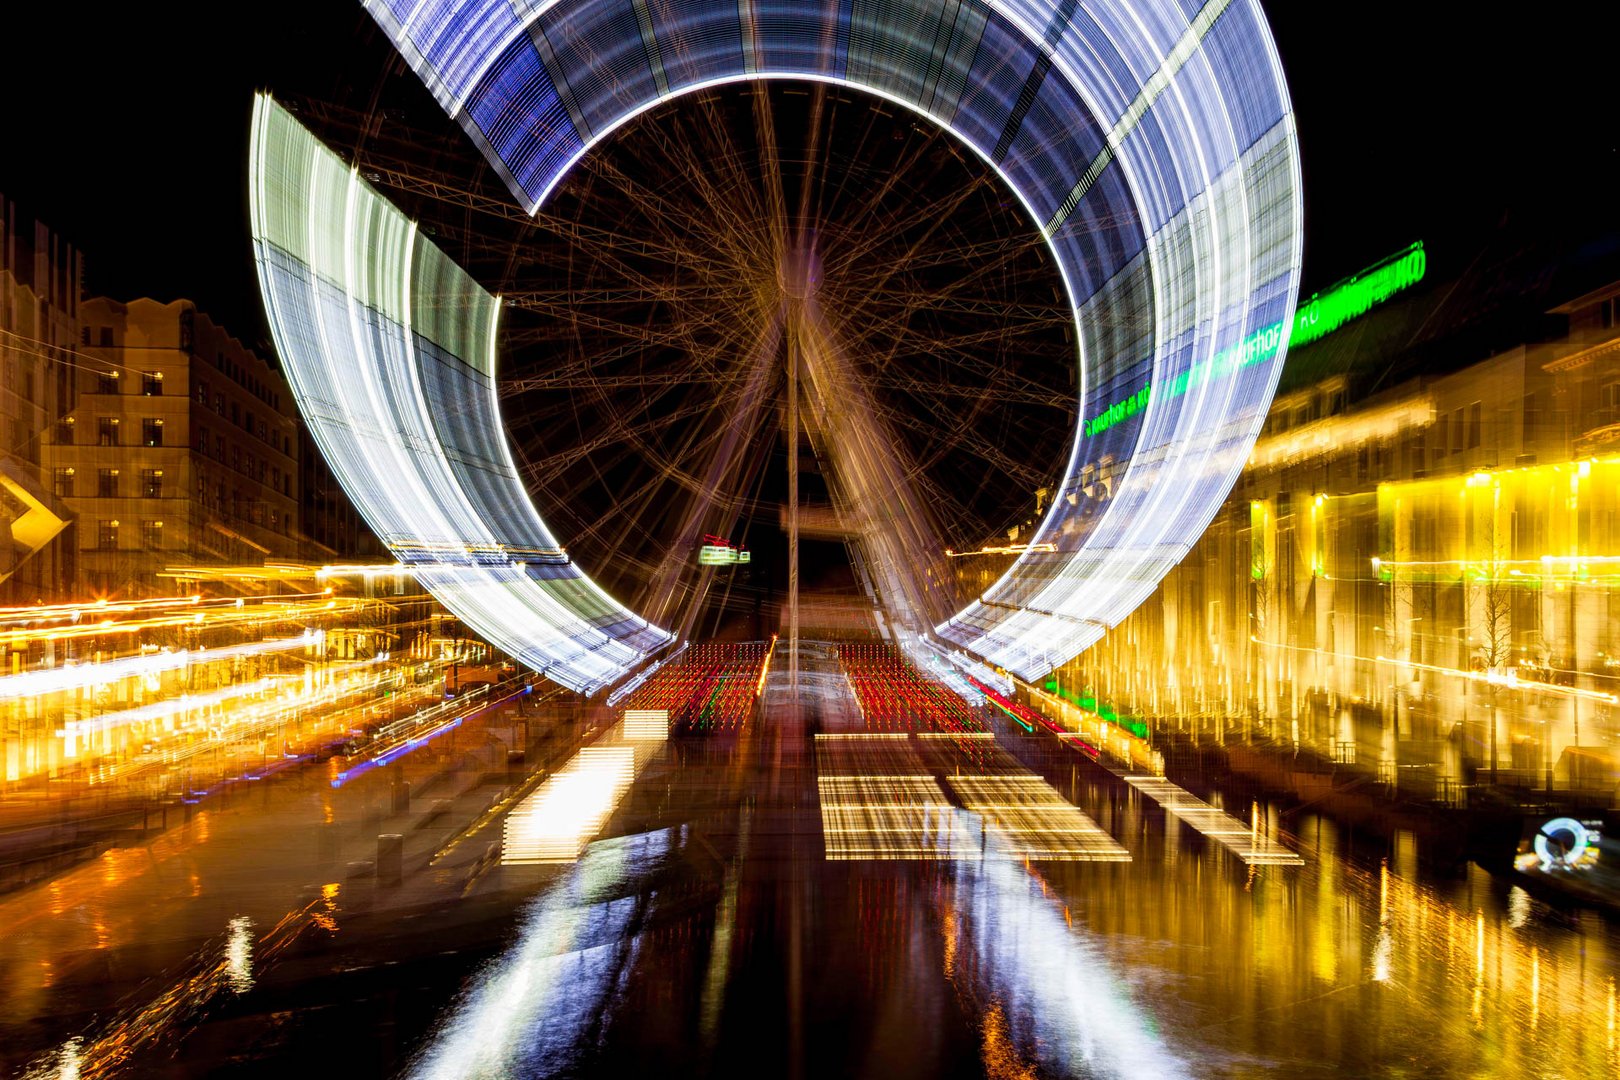 Riesenrad / Ferriswheel